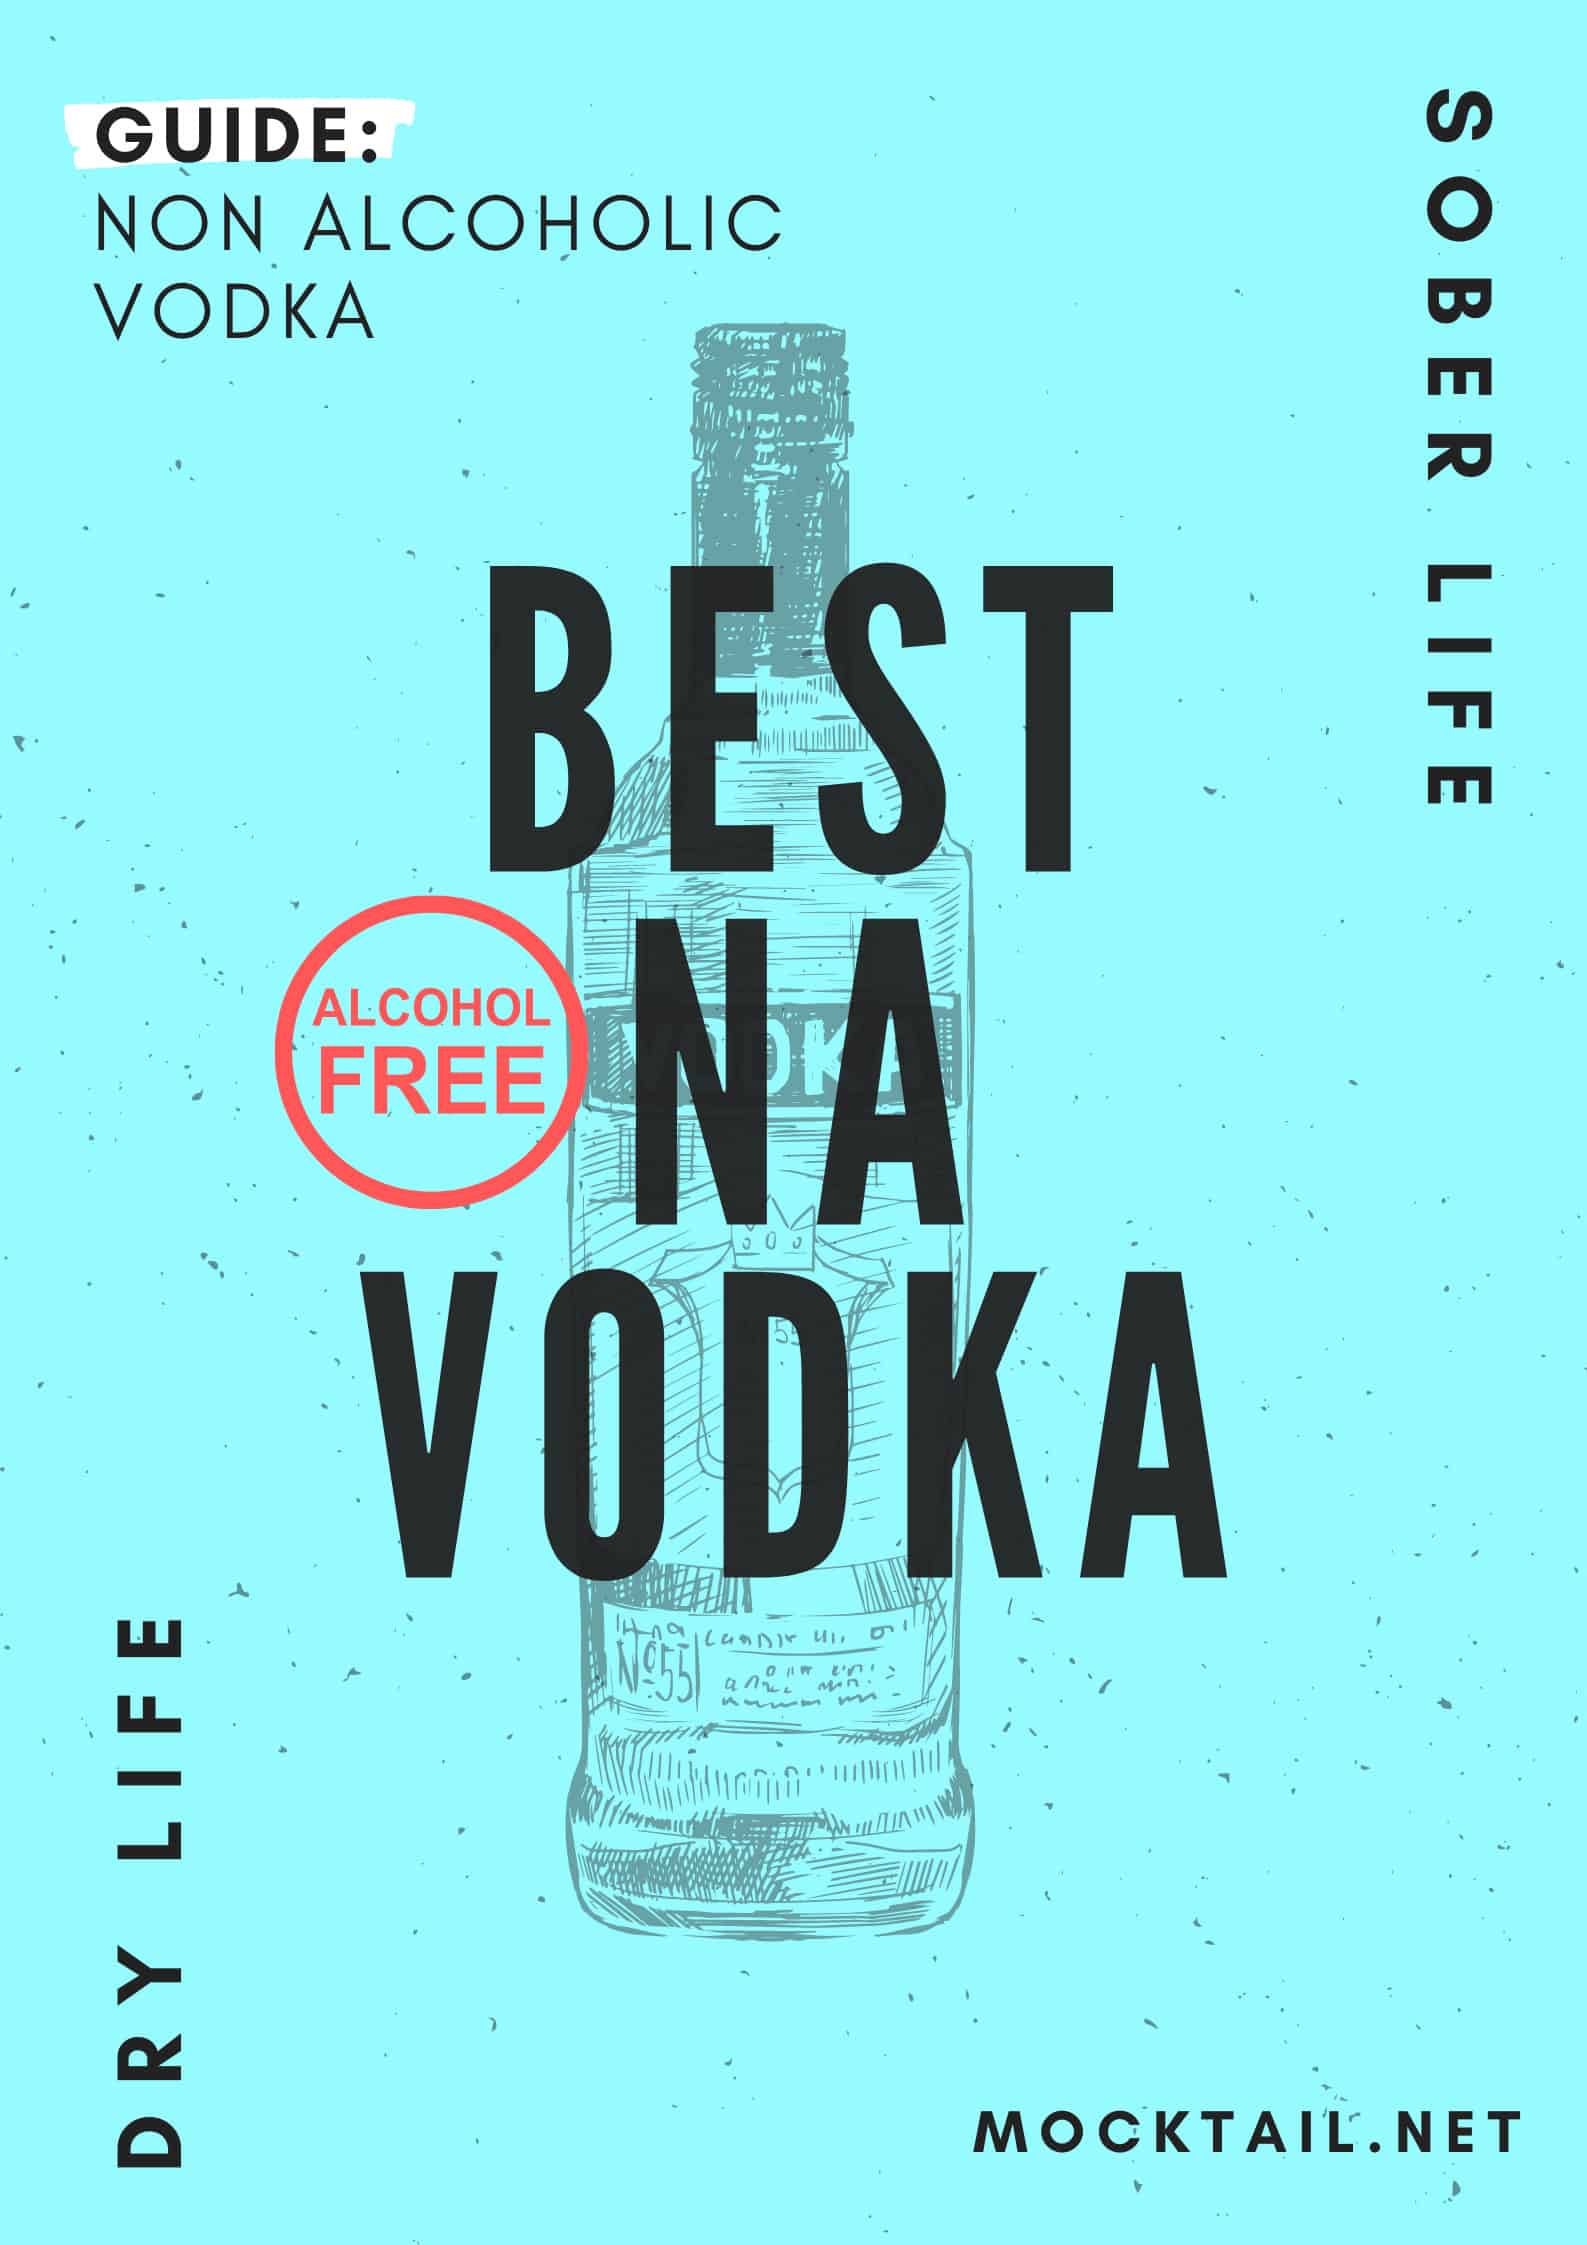 Guide: Best Non Alcoholic Vodka